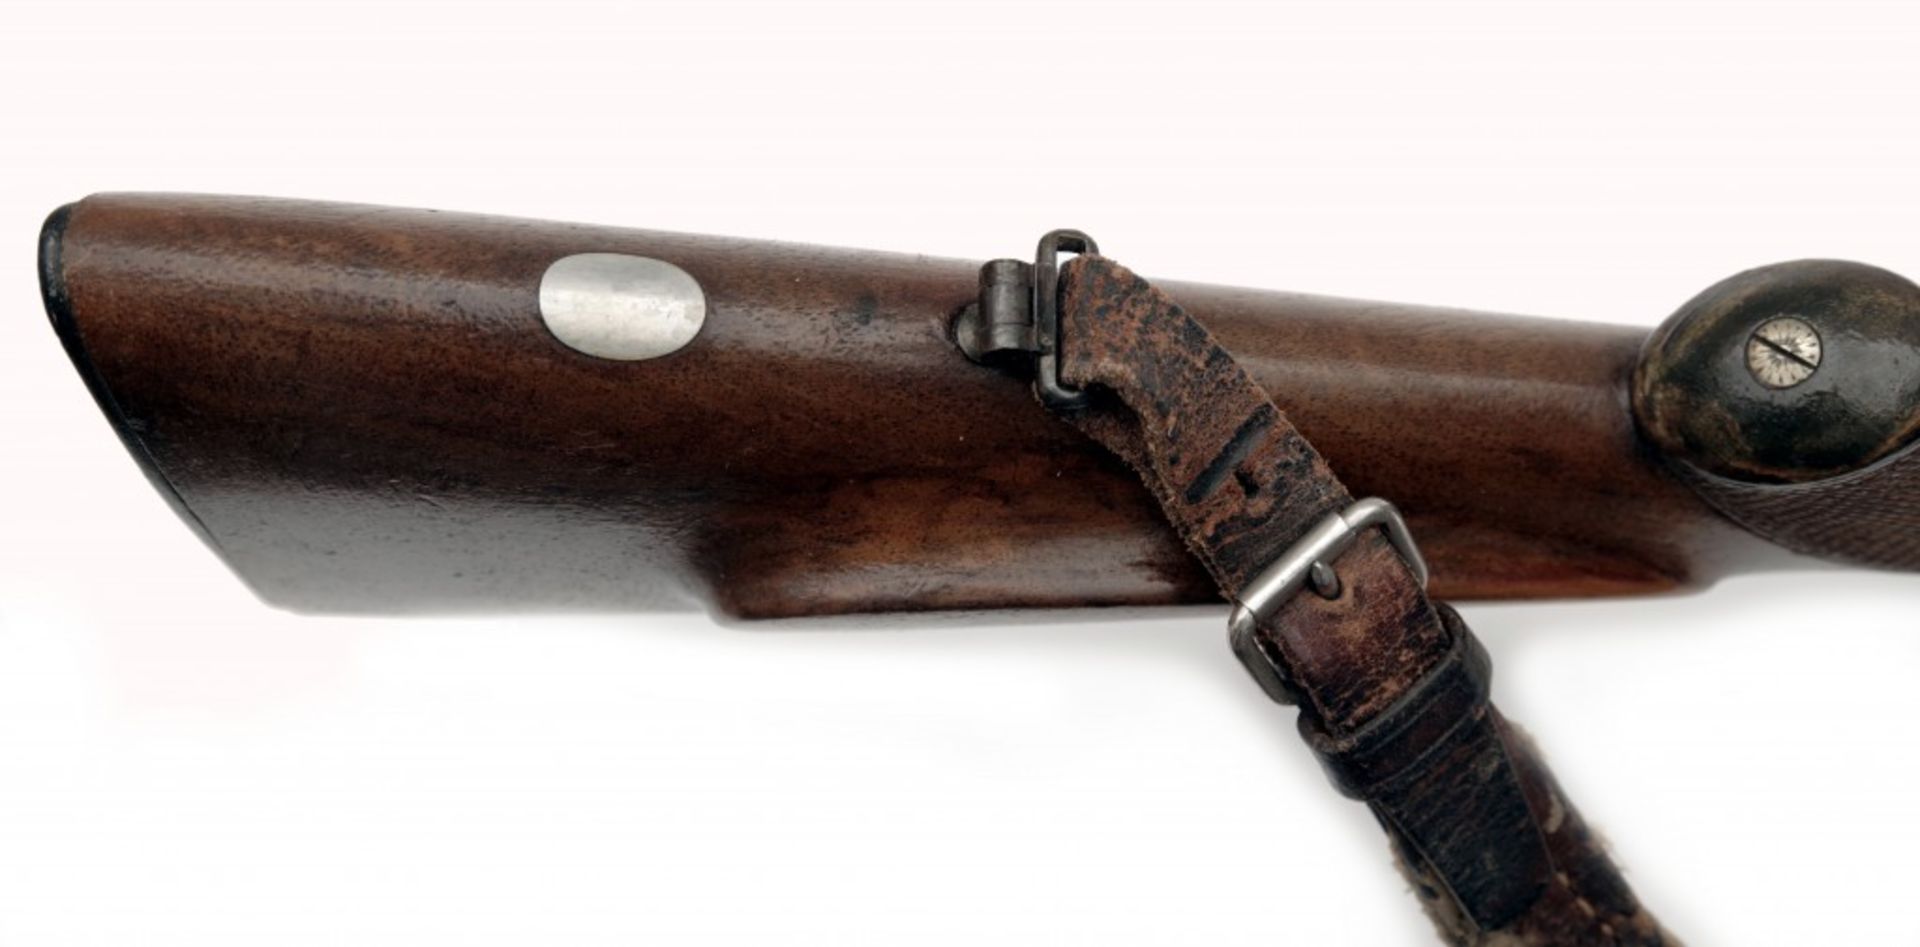 A Double-barrelled Shotgun, Ferdinand Fückert, Troppau (Opava) - Image 6 of 6